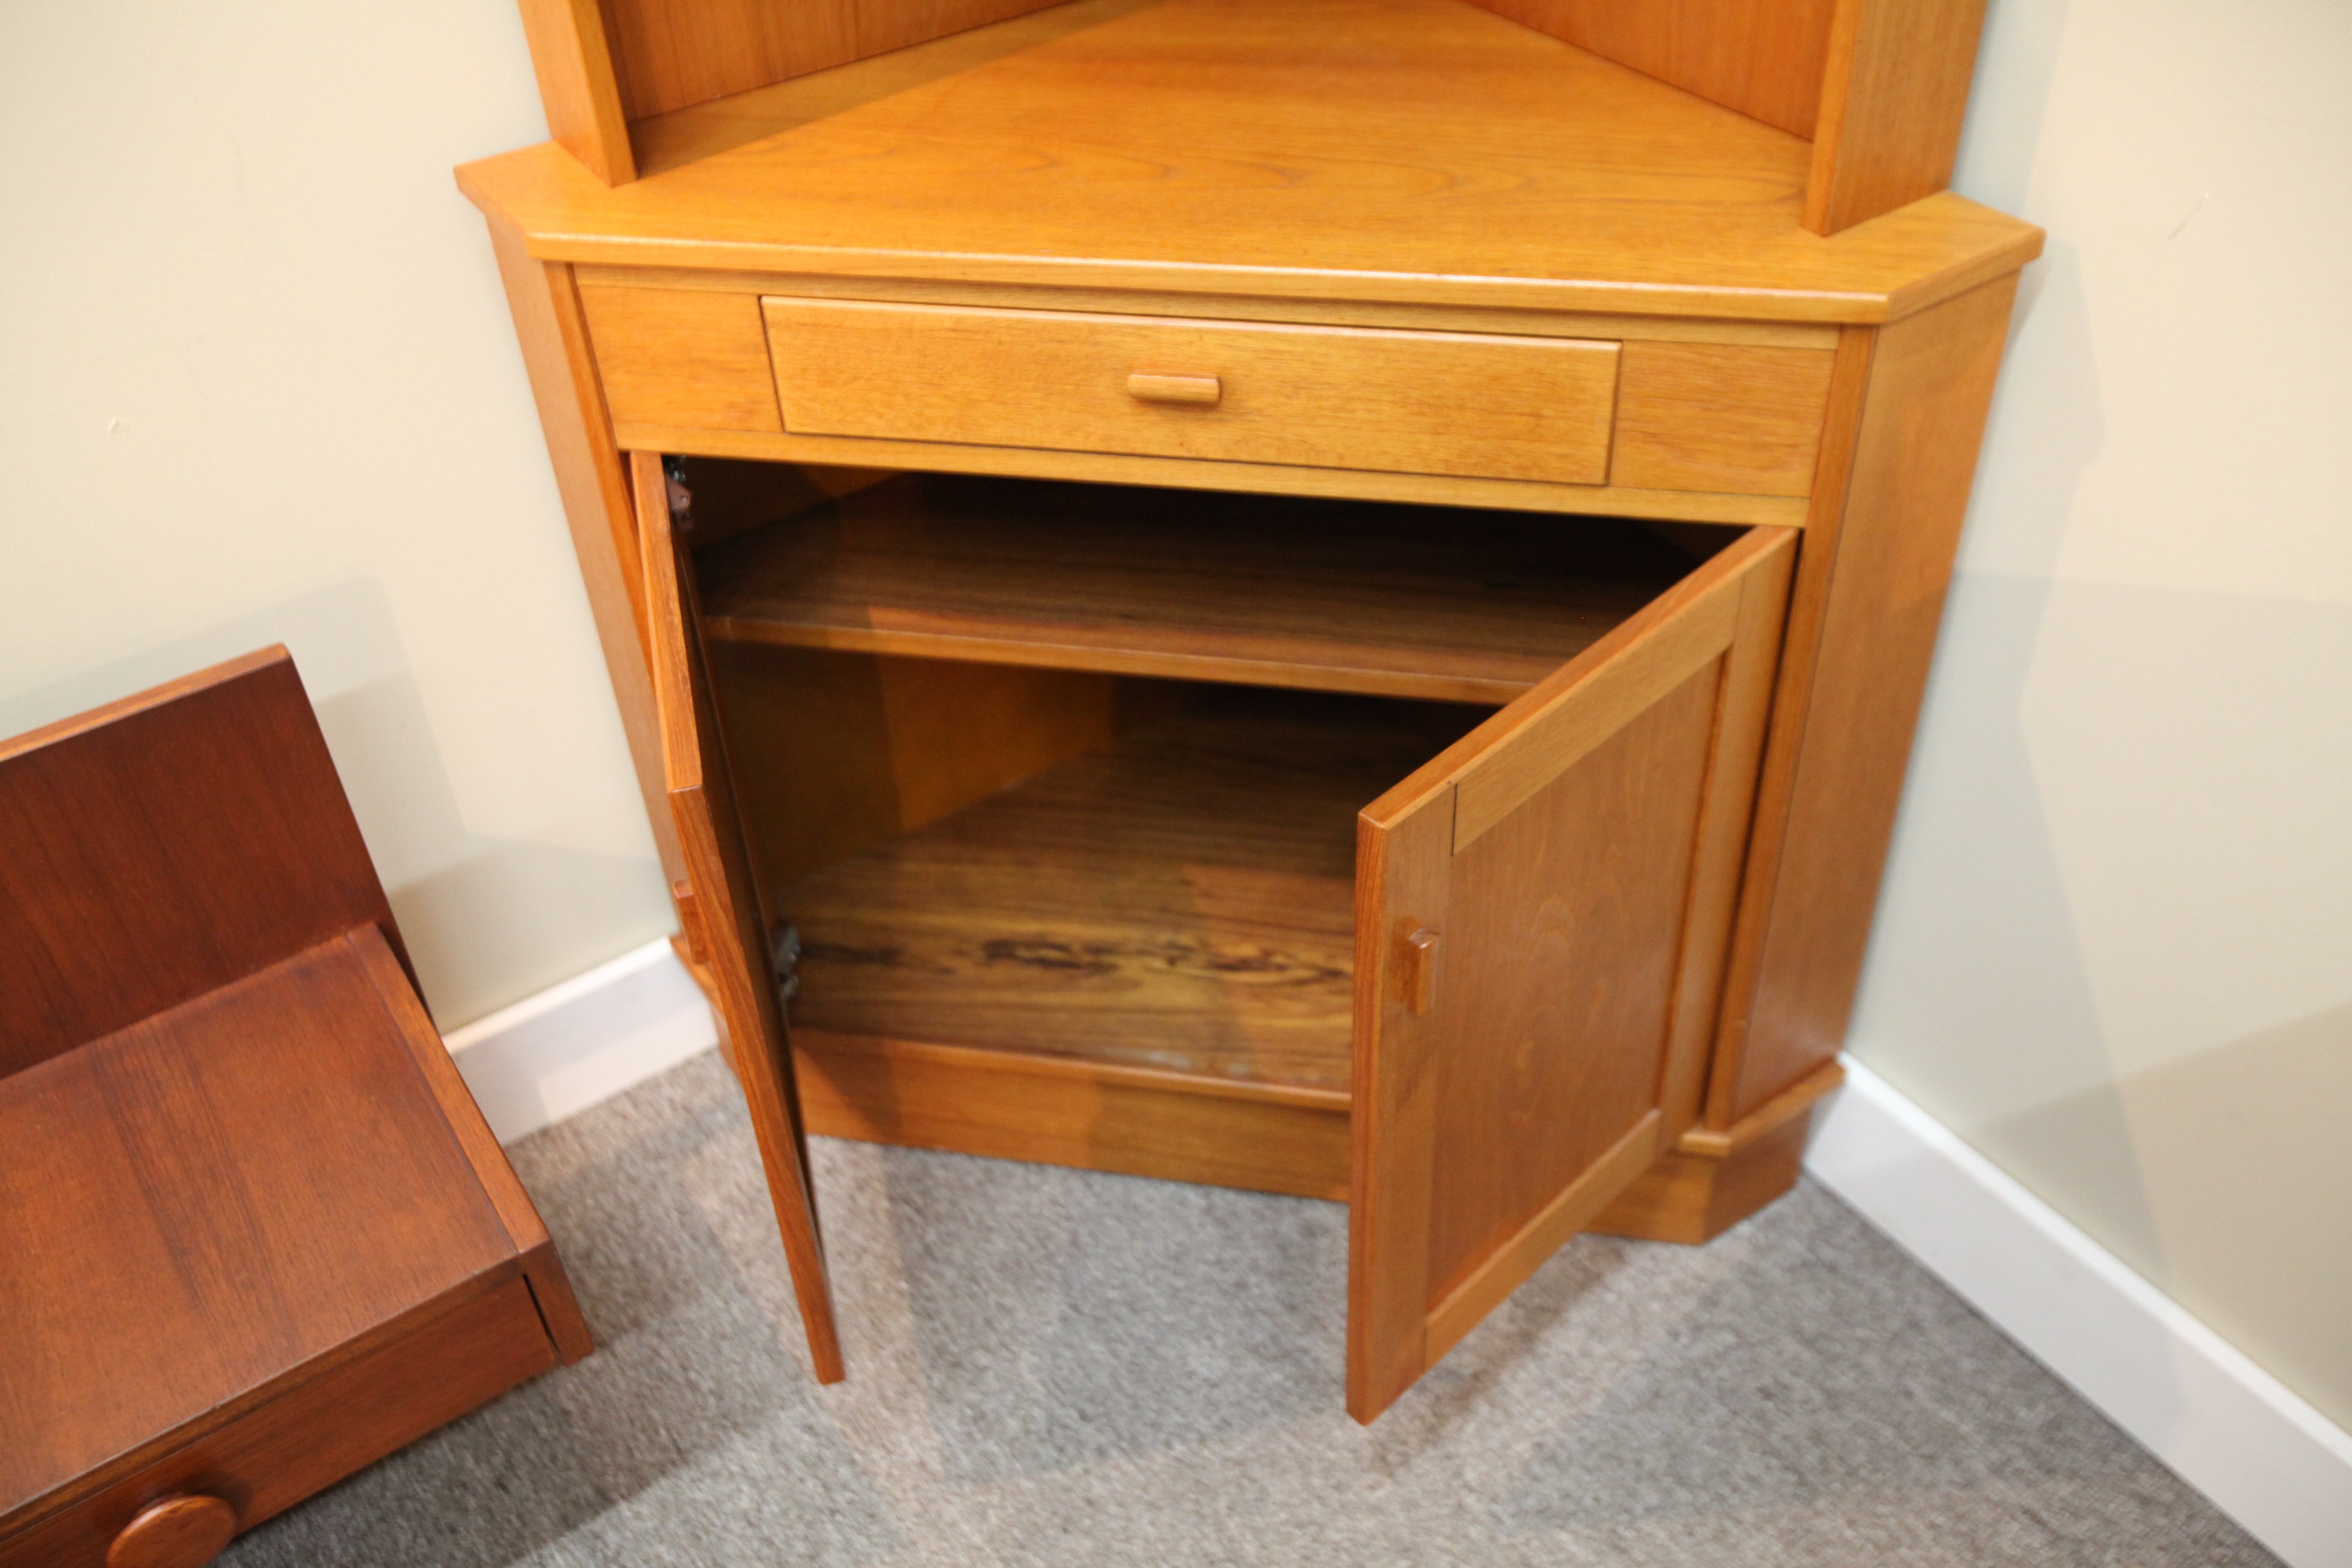 Vintage Teak Corner Cabinet (34"W x 19.5"D x 69.25"H)